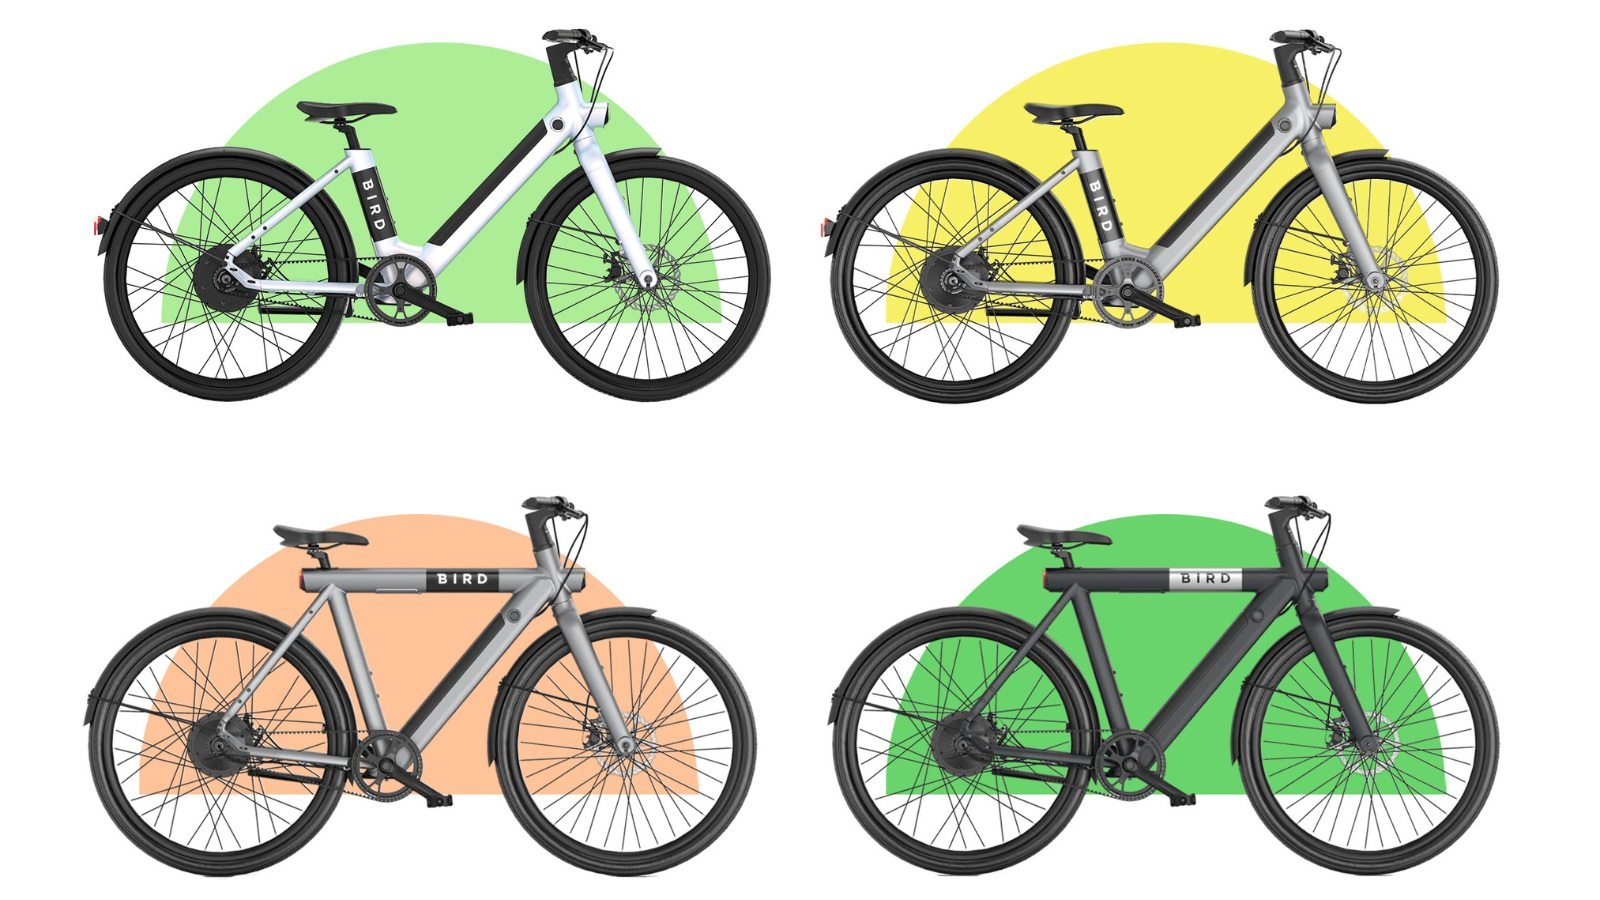 birdbike-ebike-an-affordable-and-fun-way-to-ride